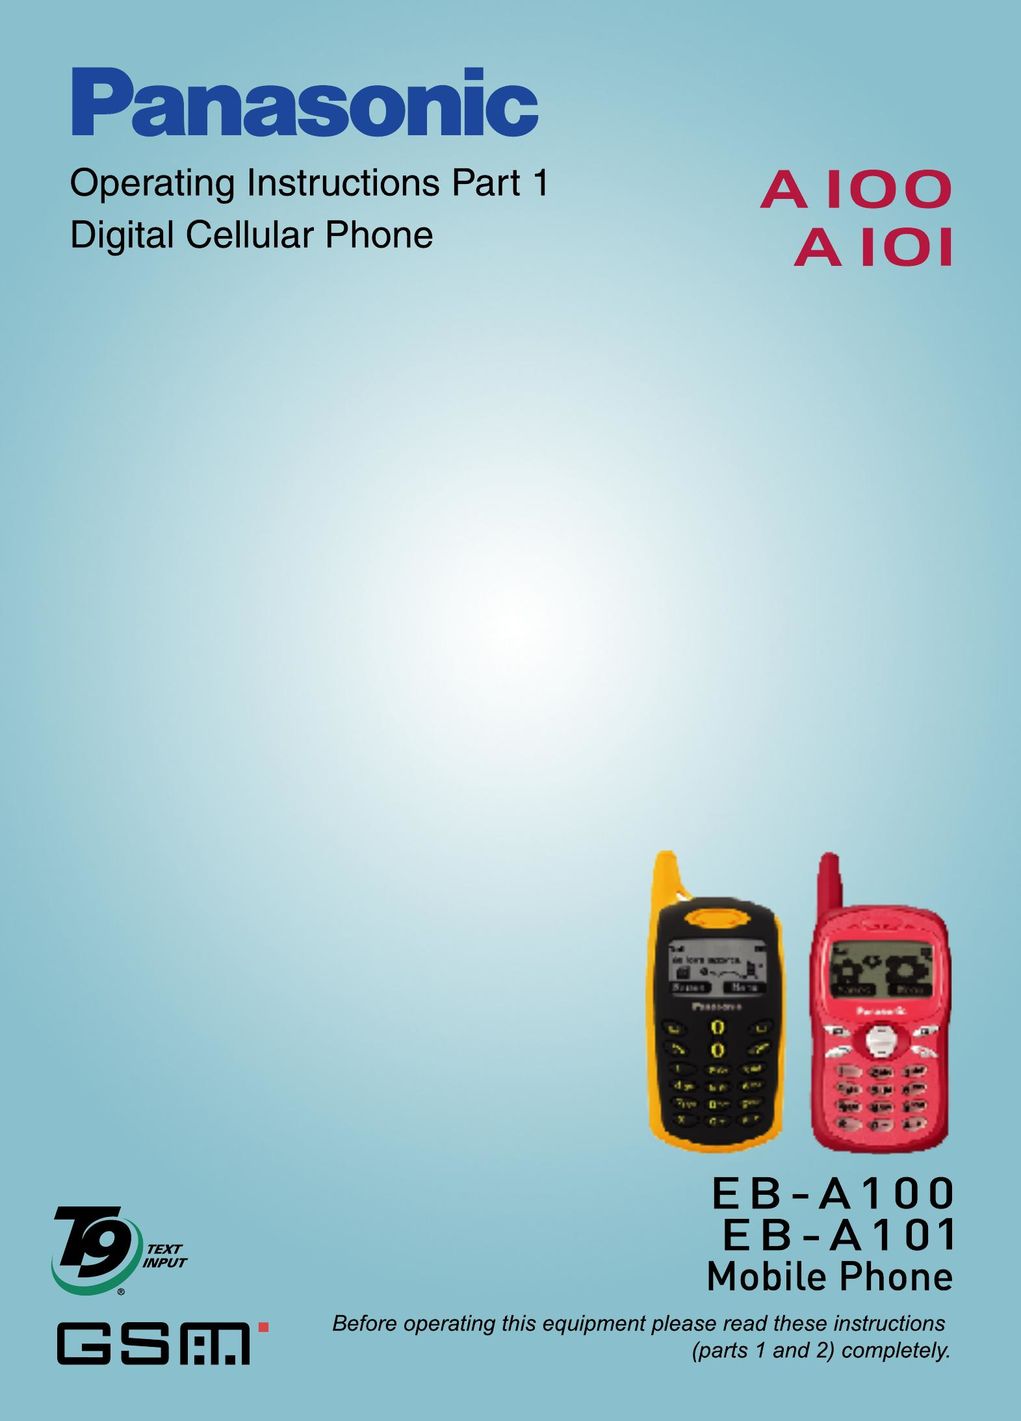 Panasonic A101 Cell Phone User Manual